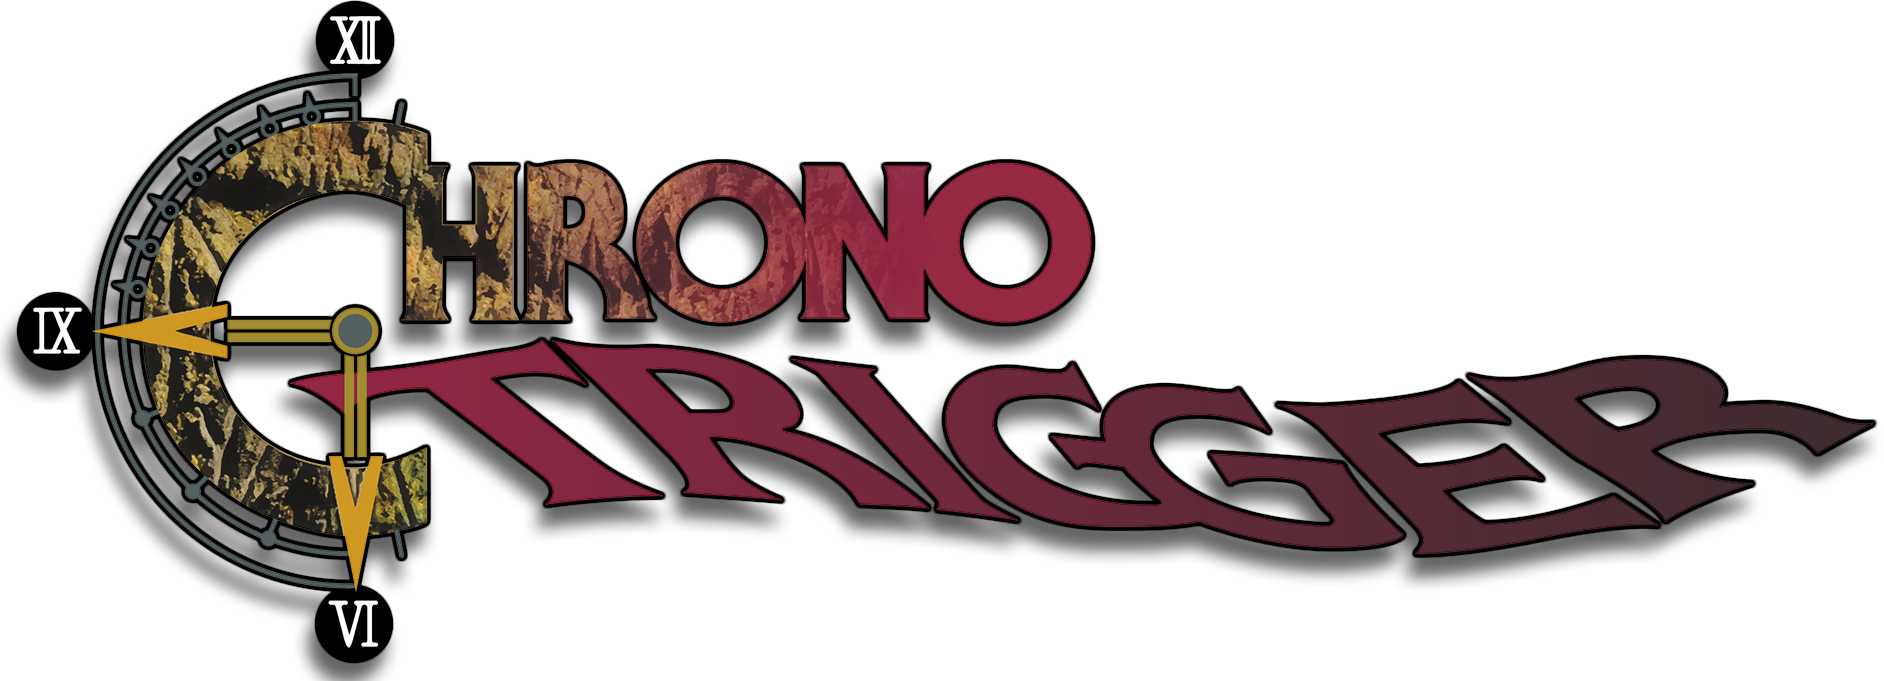 Chrono Trigger Logo PNG Image